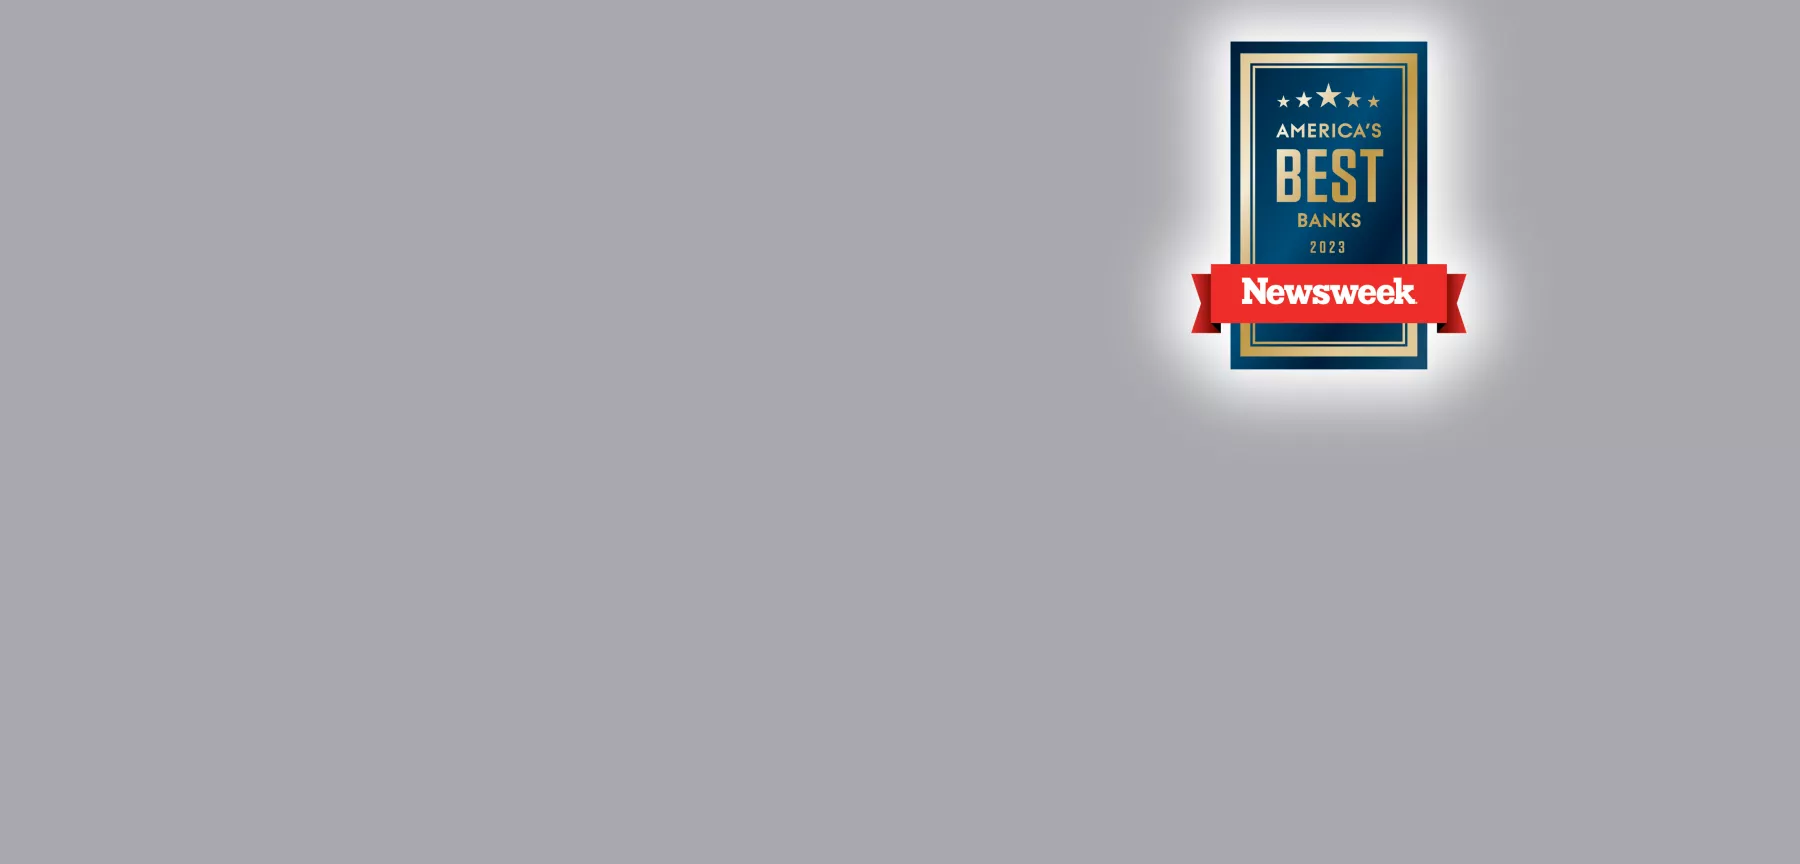 Best Bank award logo on grey background